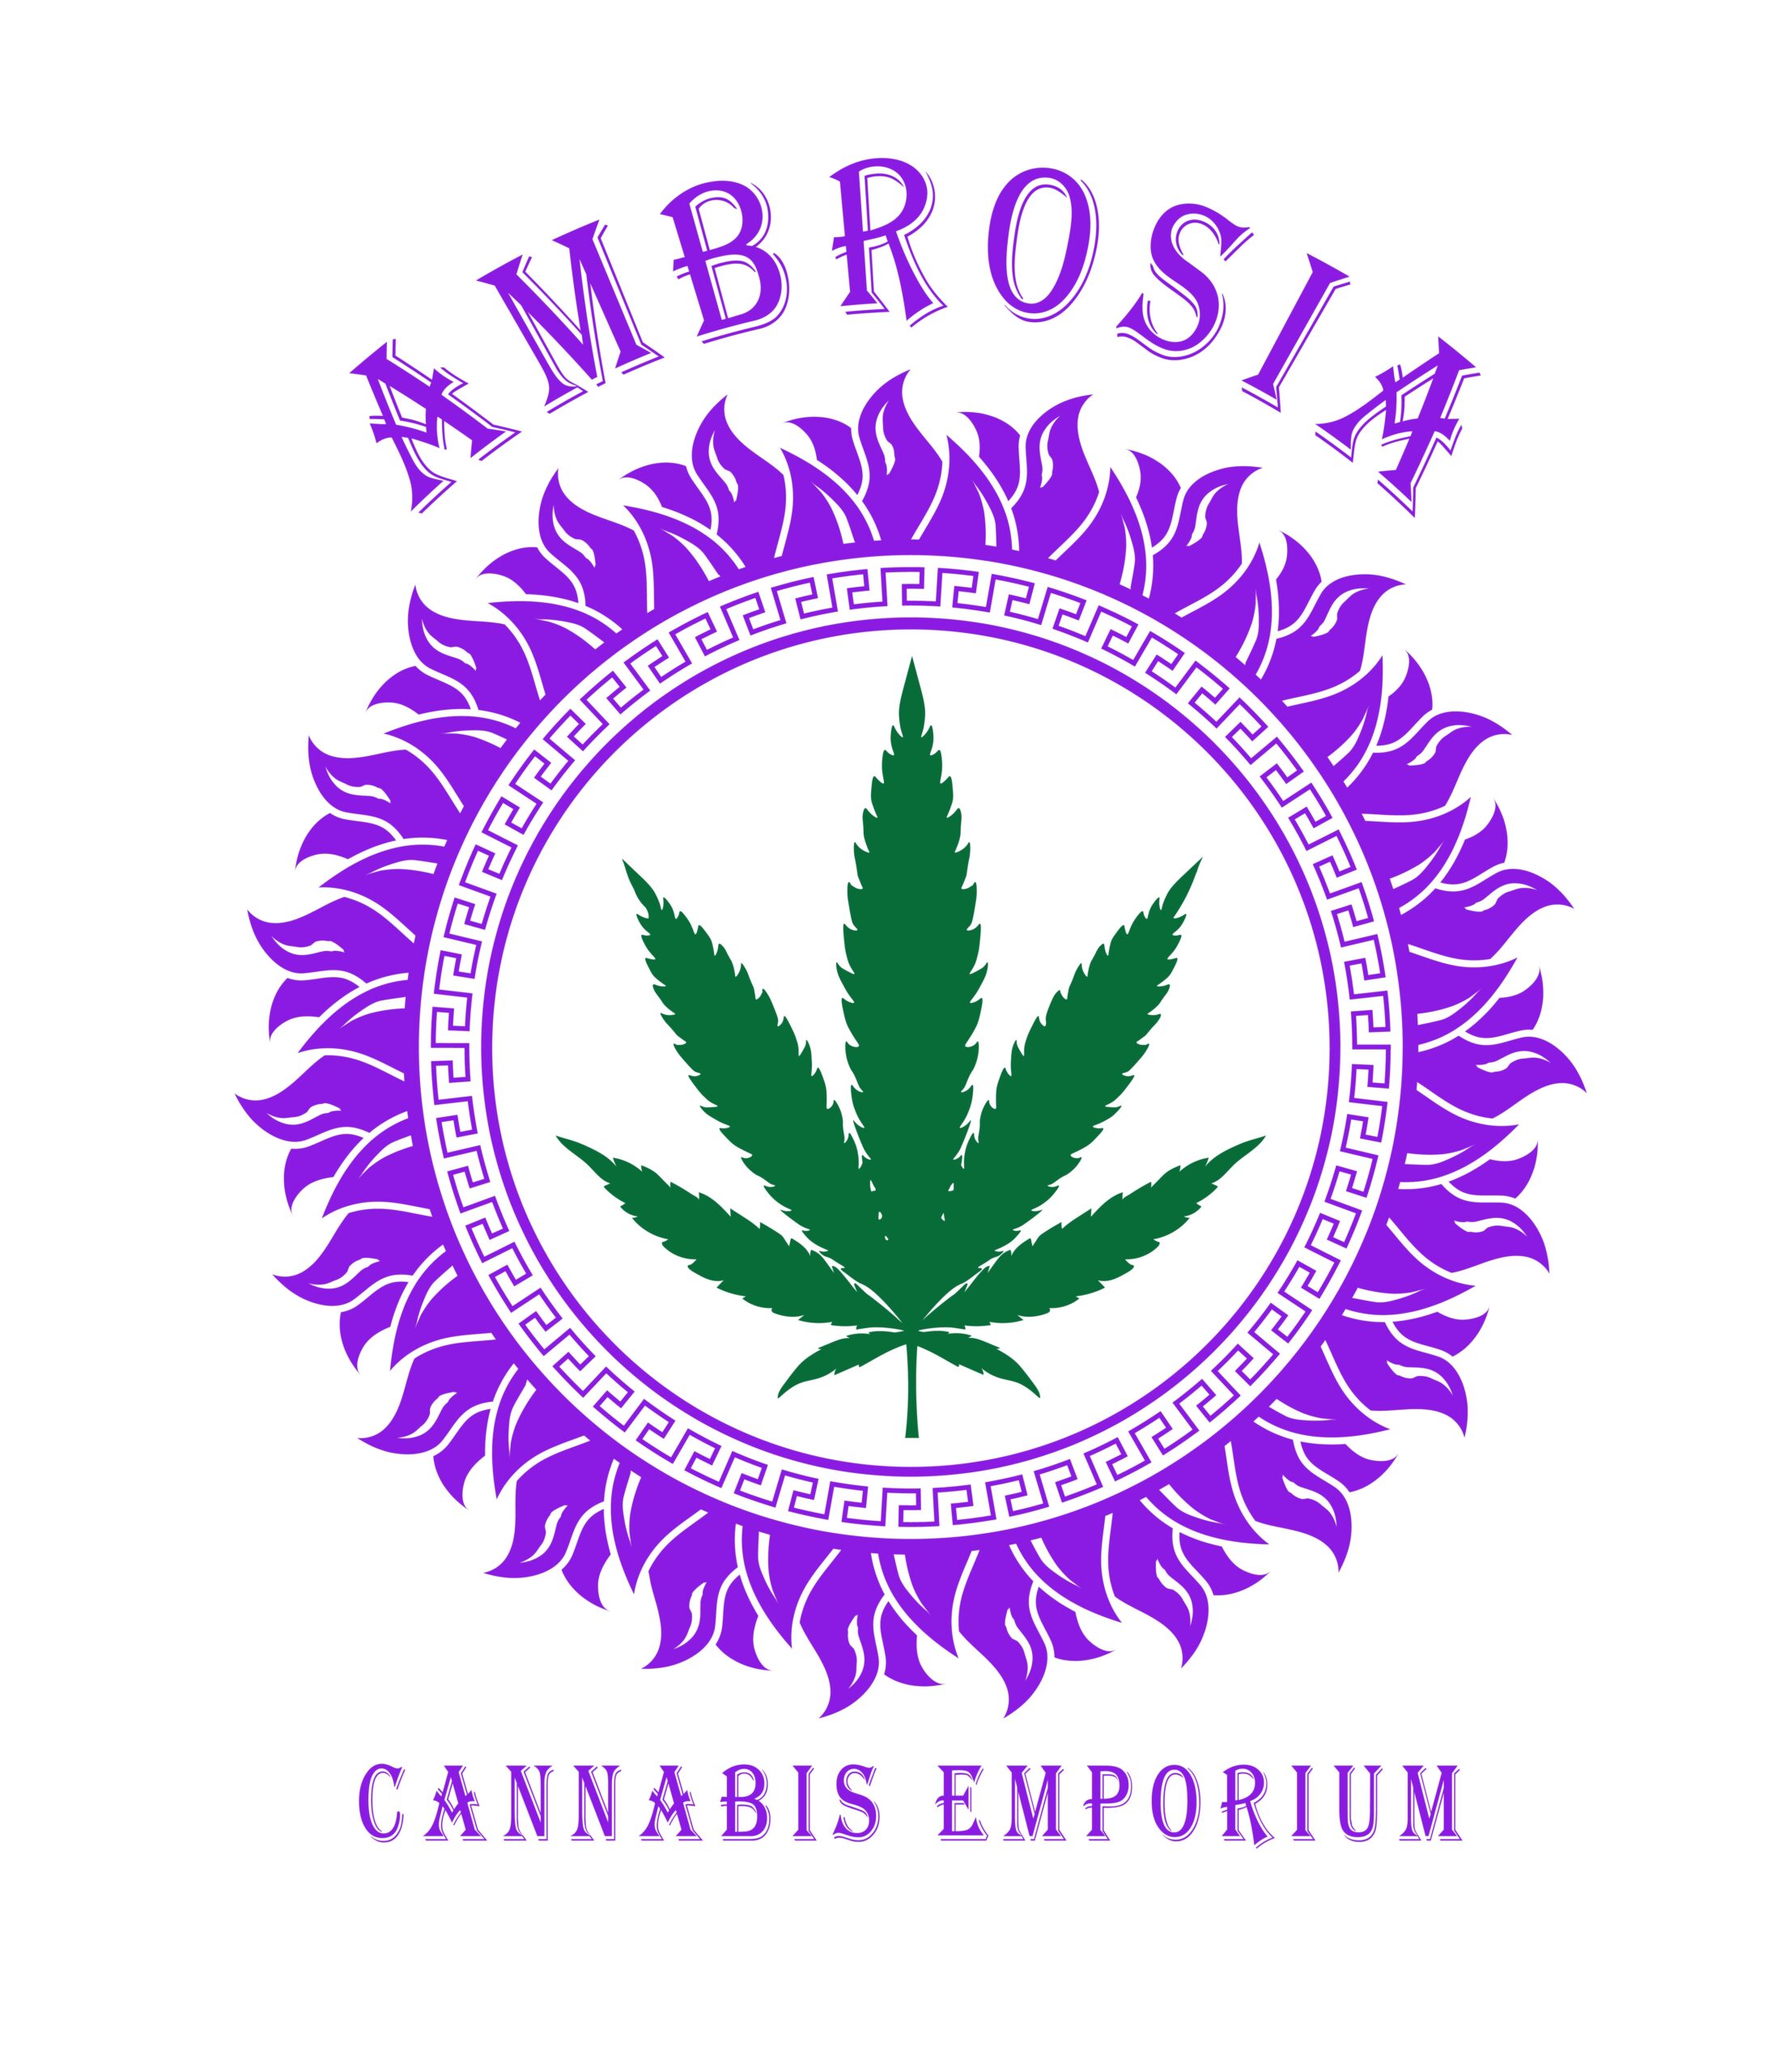 Ambrosia cannabis